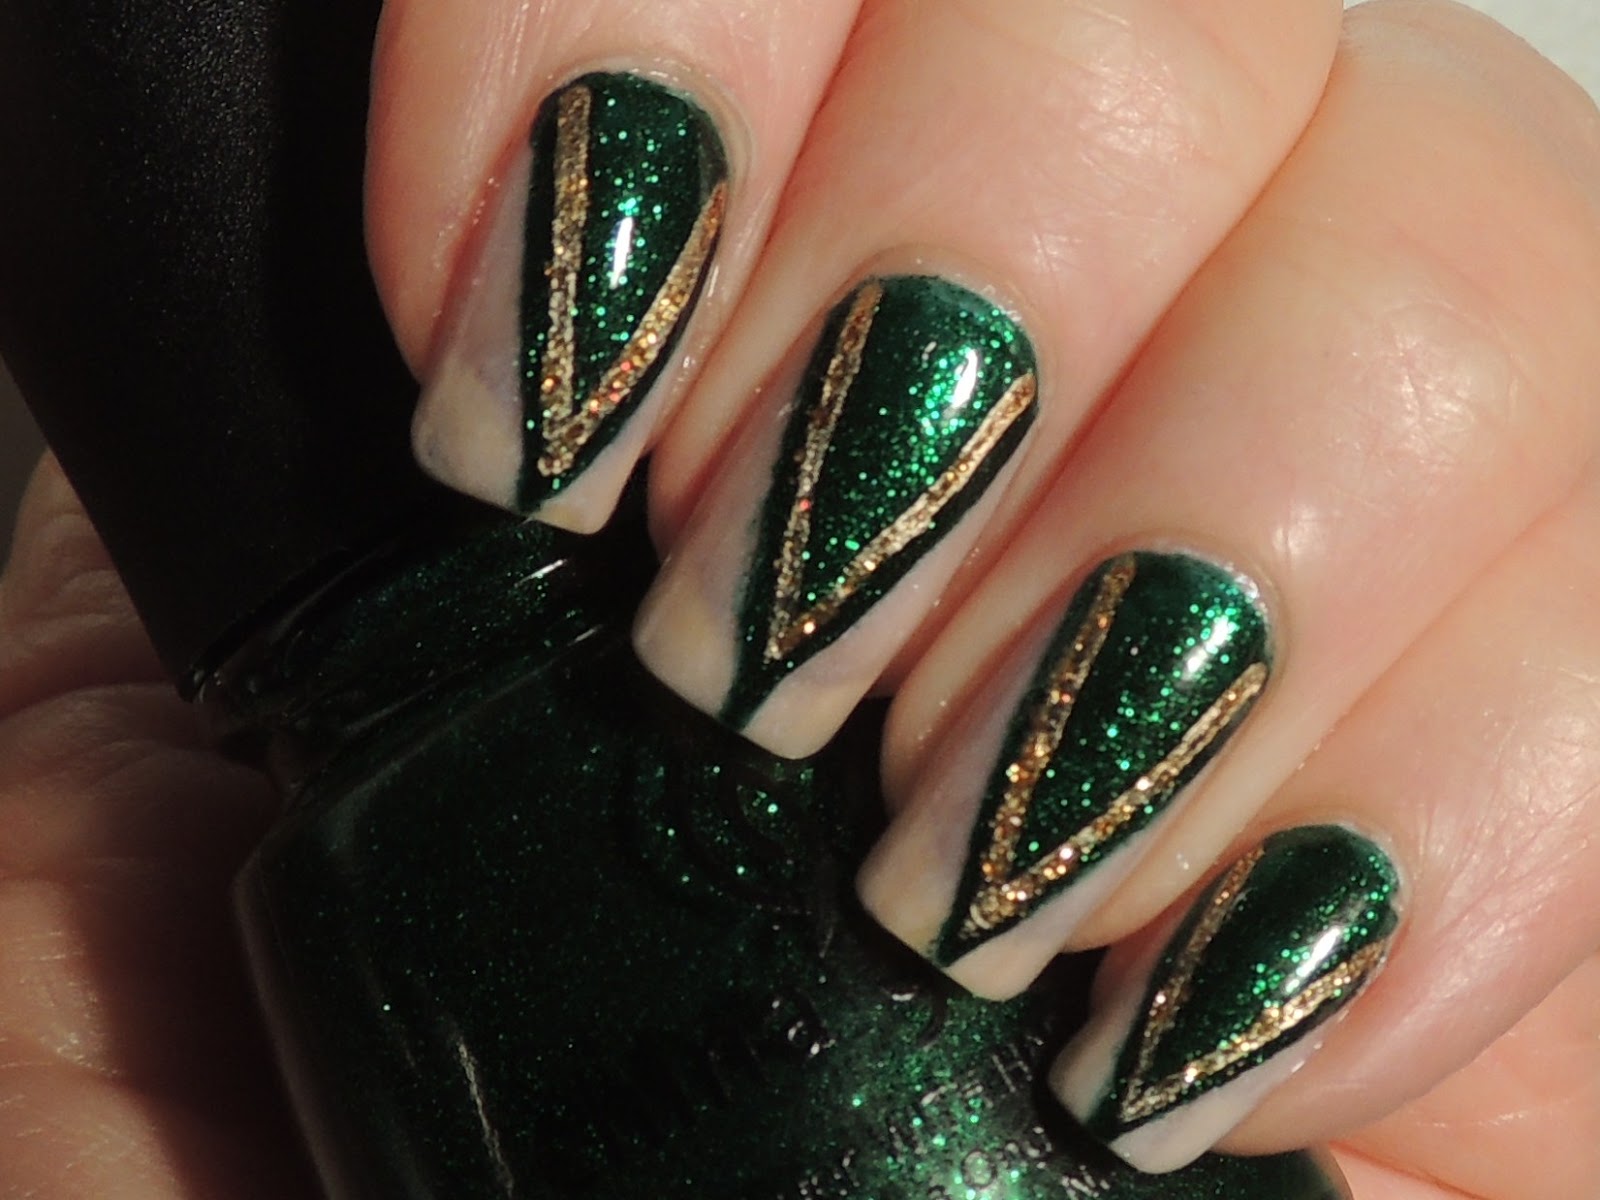 3. Emerald green nail polish - wide 7